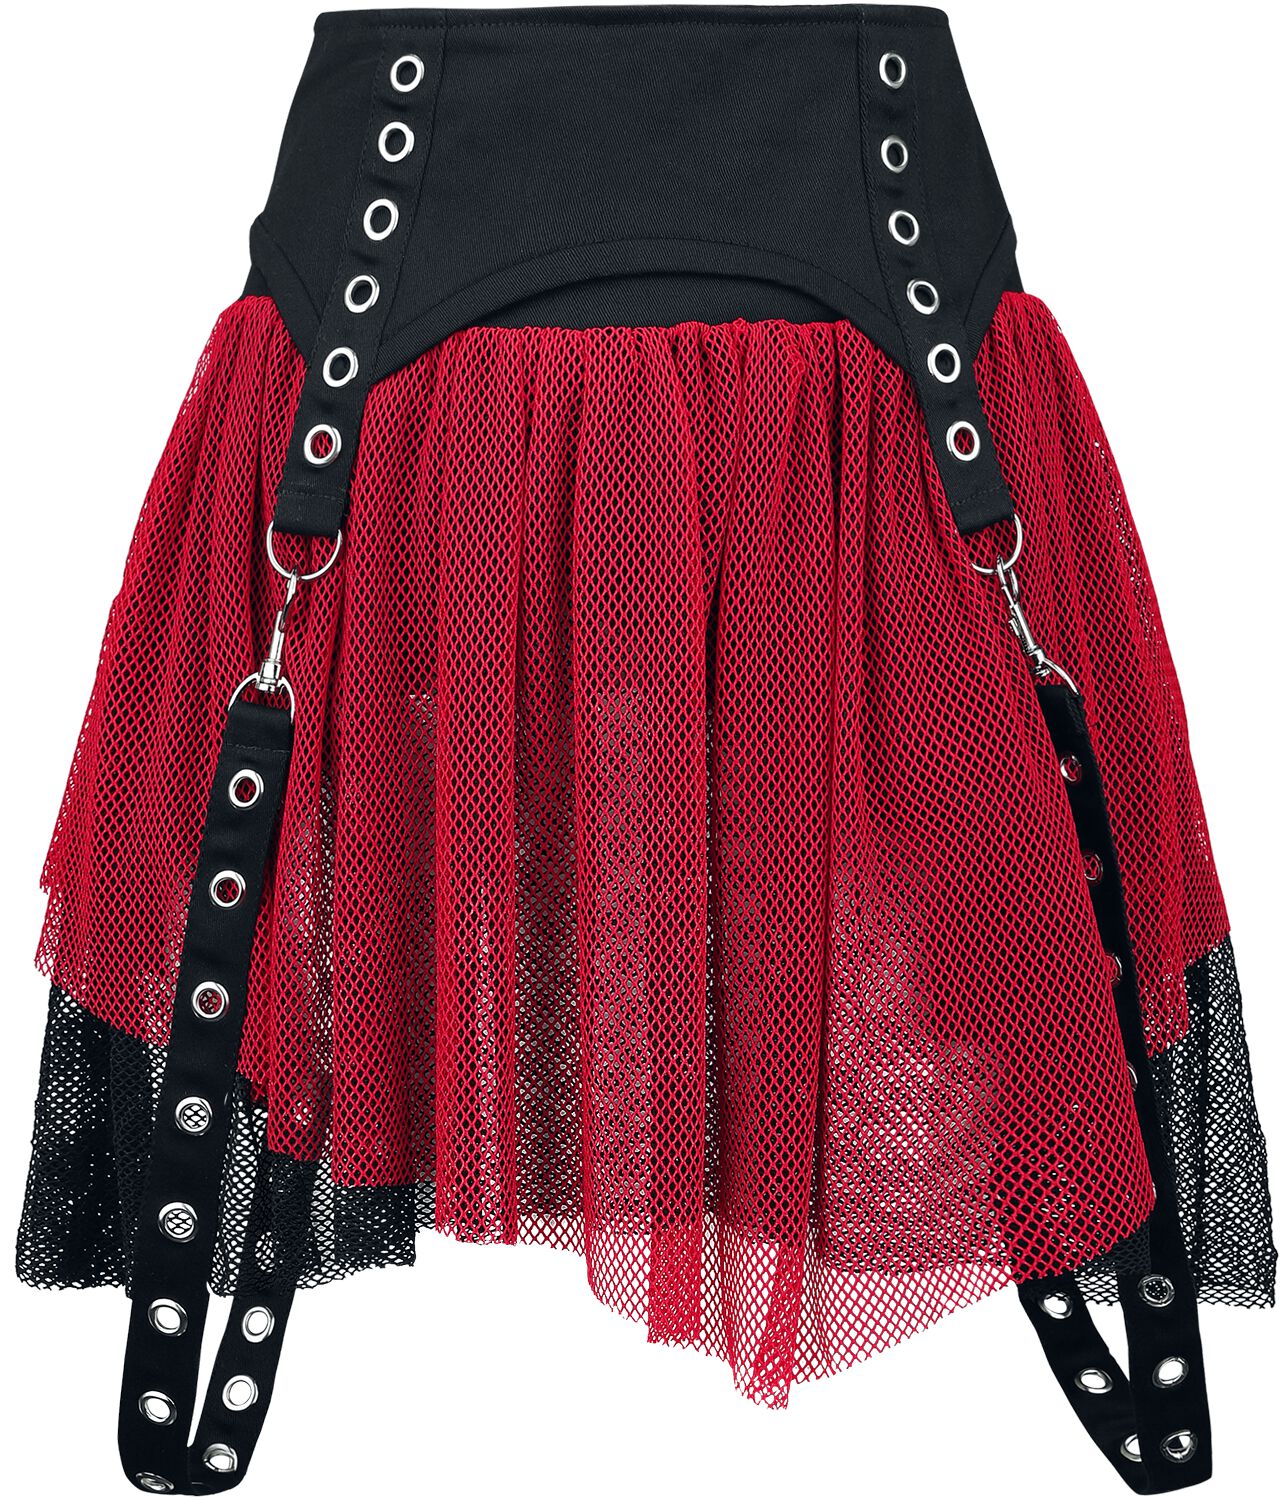 Poizen Industries Cybele Skirt Kurzer Rock schwarz rot in XS